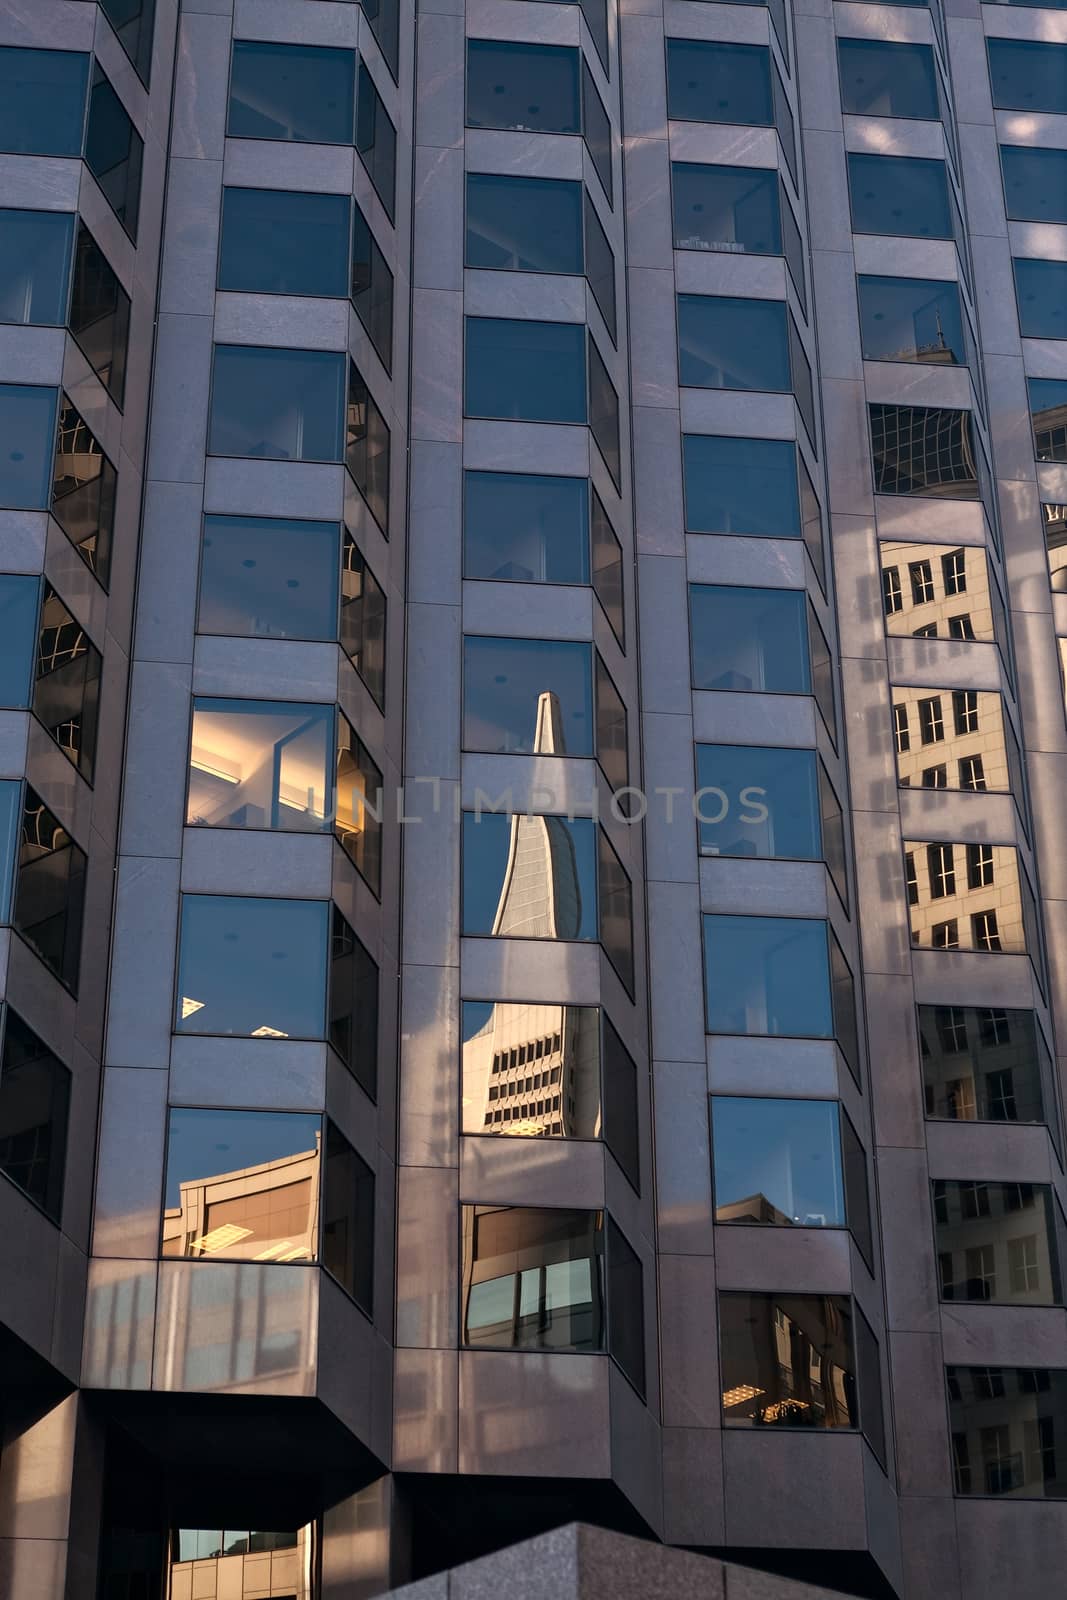 Transamerica building reflected in the windows, San Francisco, California